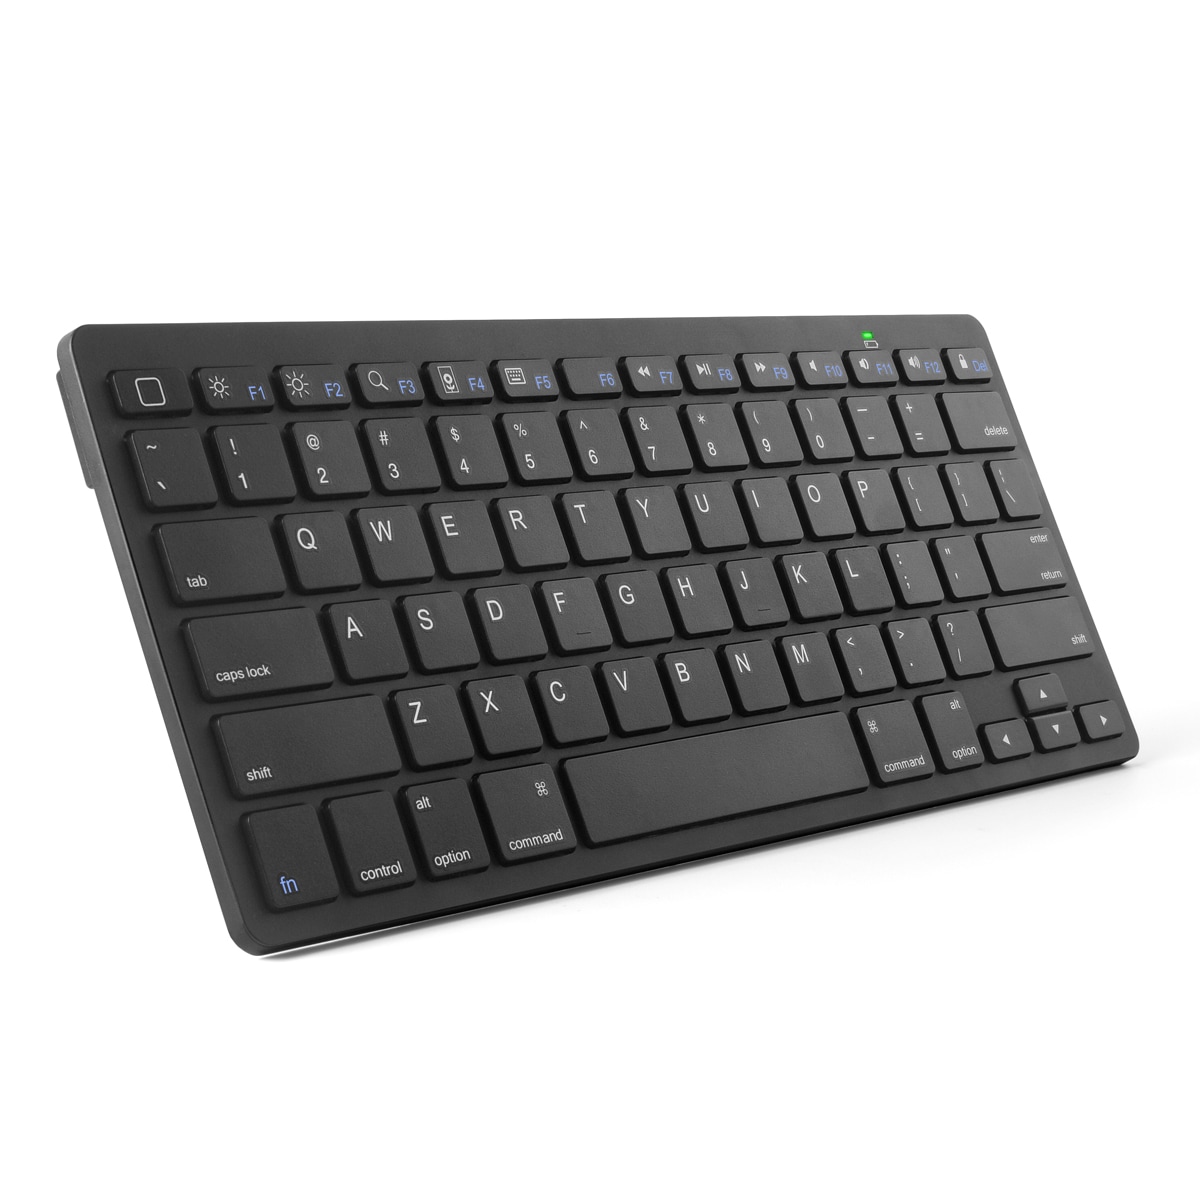 CHOETECH Bluetooh Keyboard Ultra Slim Mini Wireless Keyboard for iPad,iPhone,Samsung Cellphones Tablets  Black - 2